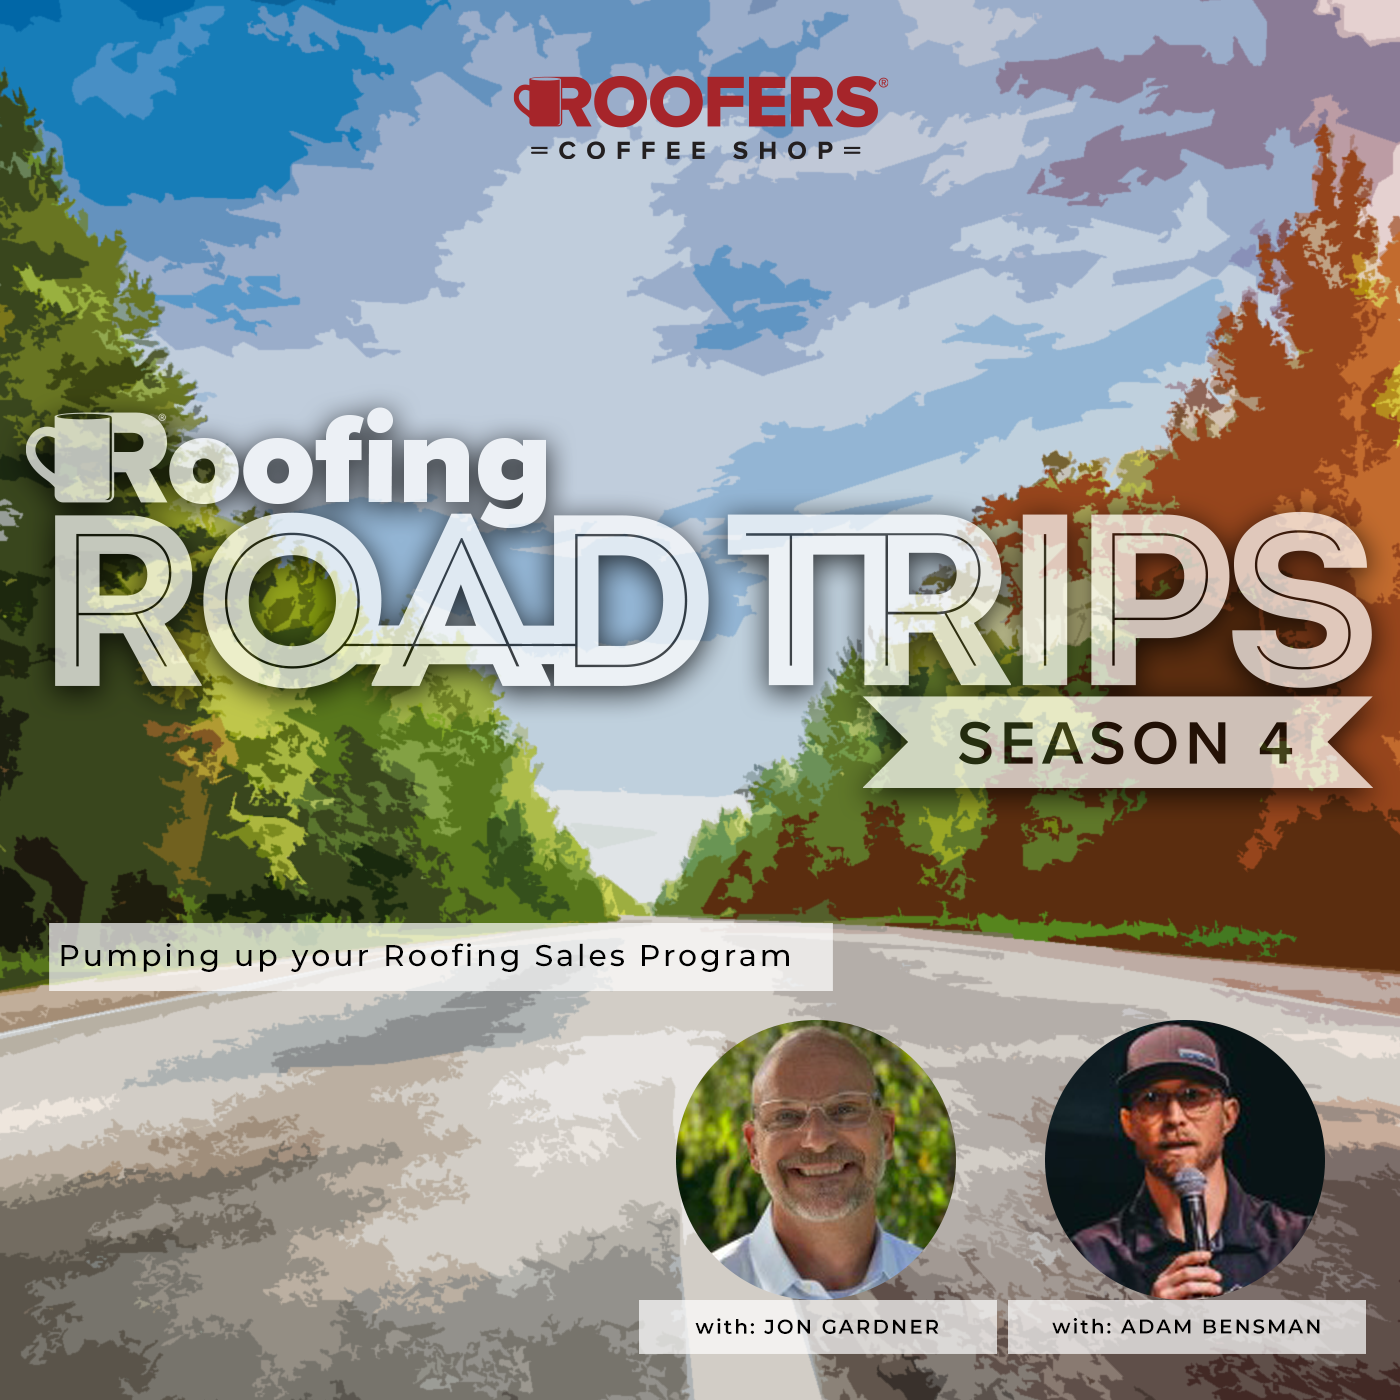 Jon Gardner, Owens Corning & Adam Bensman, the Roof Strategist - Pumping up your Roofing Sales Program